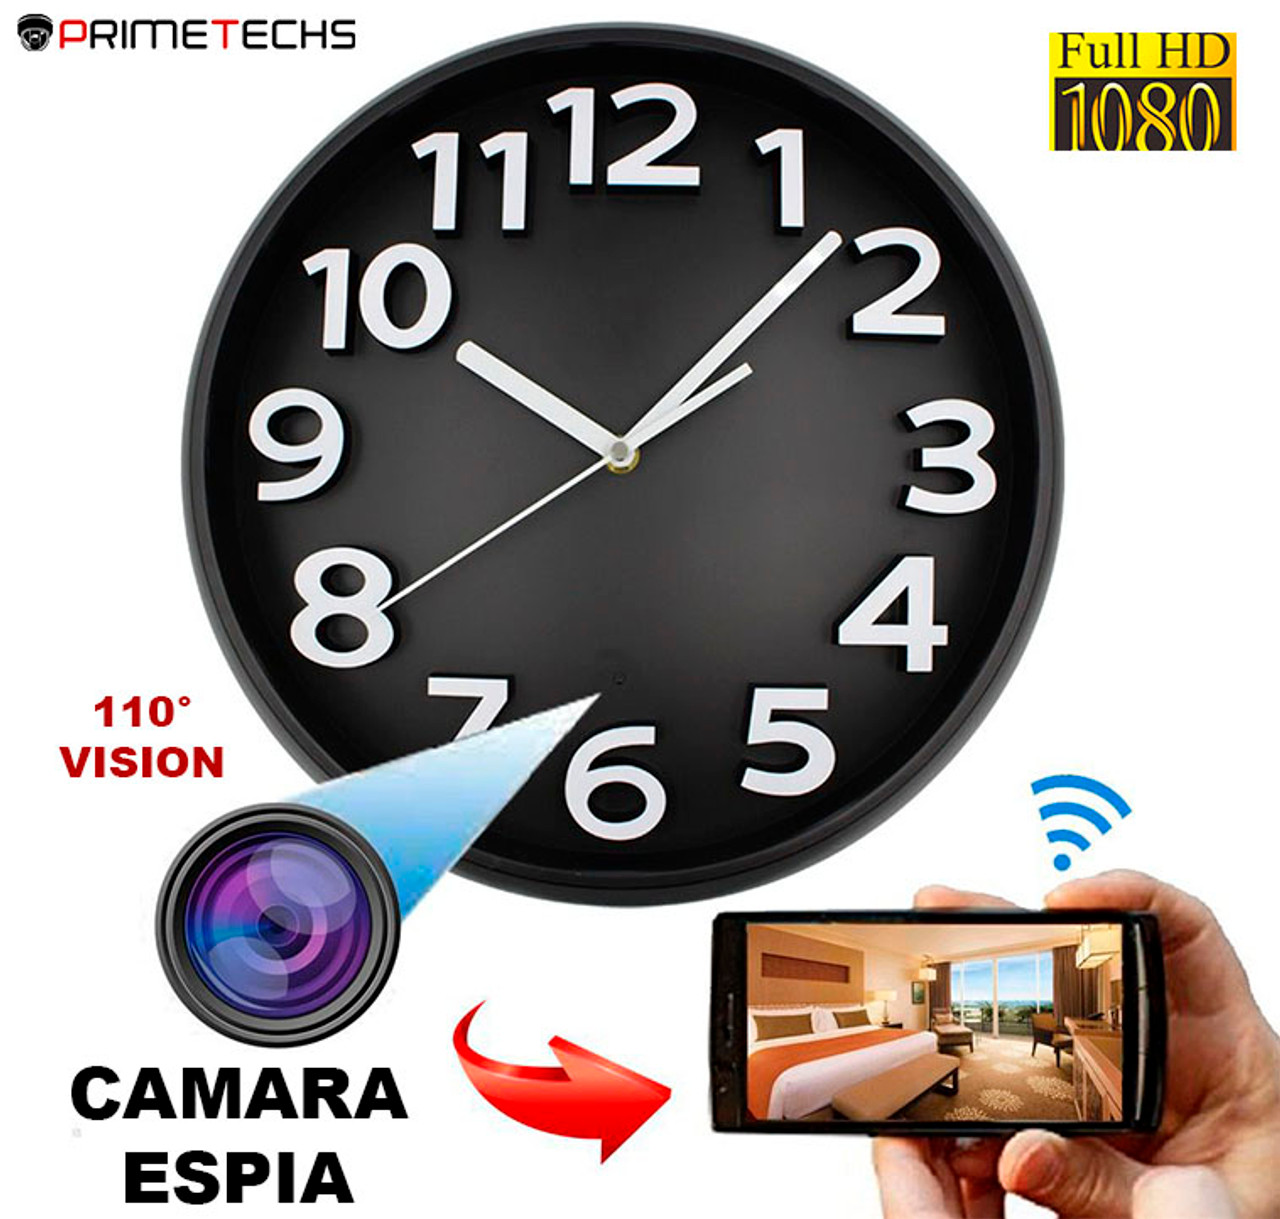 Reloj con mini cámara integrada de 1080p 2 megapíxeles, totalmente WIFI,  batería de respaldo de 1200mAh, infrarrojo discreto, 30fps